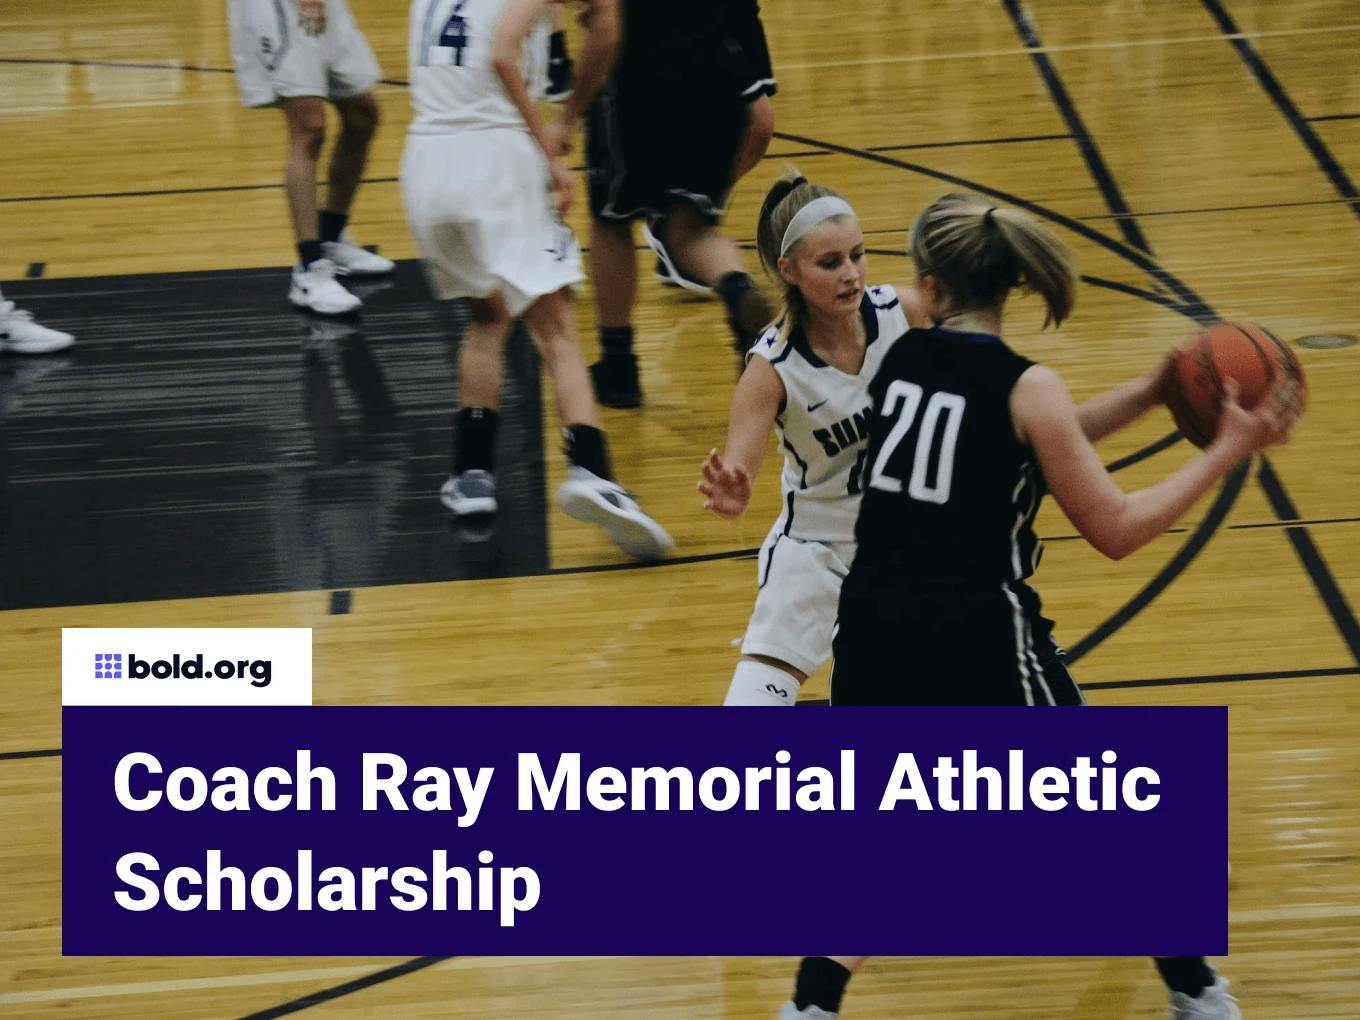 Coach Ray Memorial Athletic Scholarship